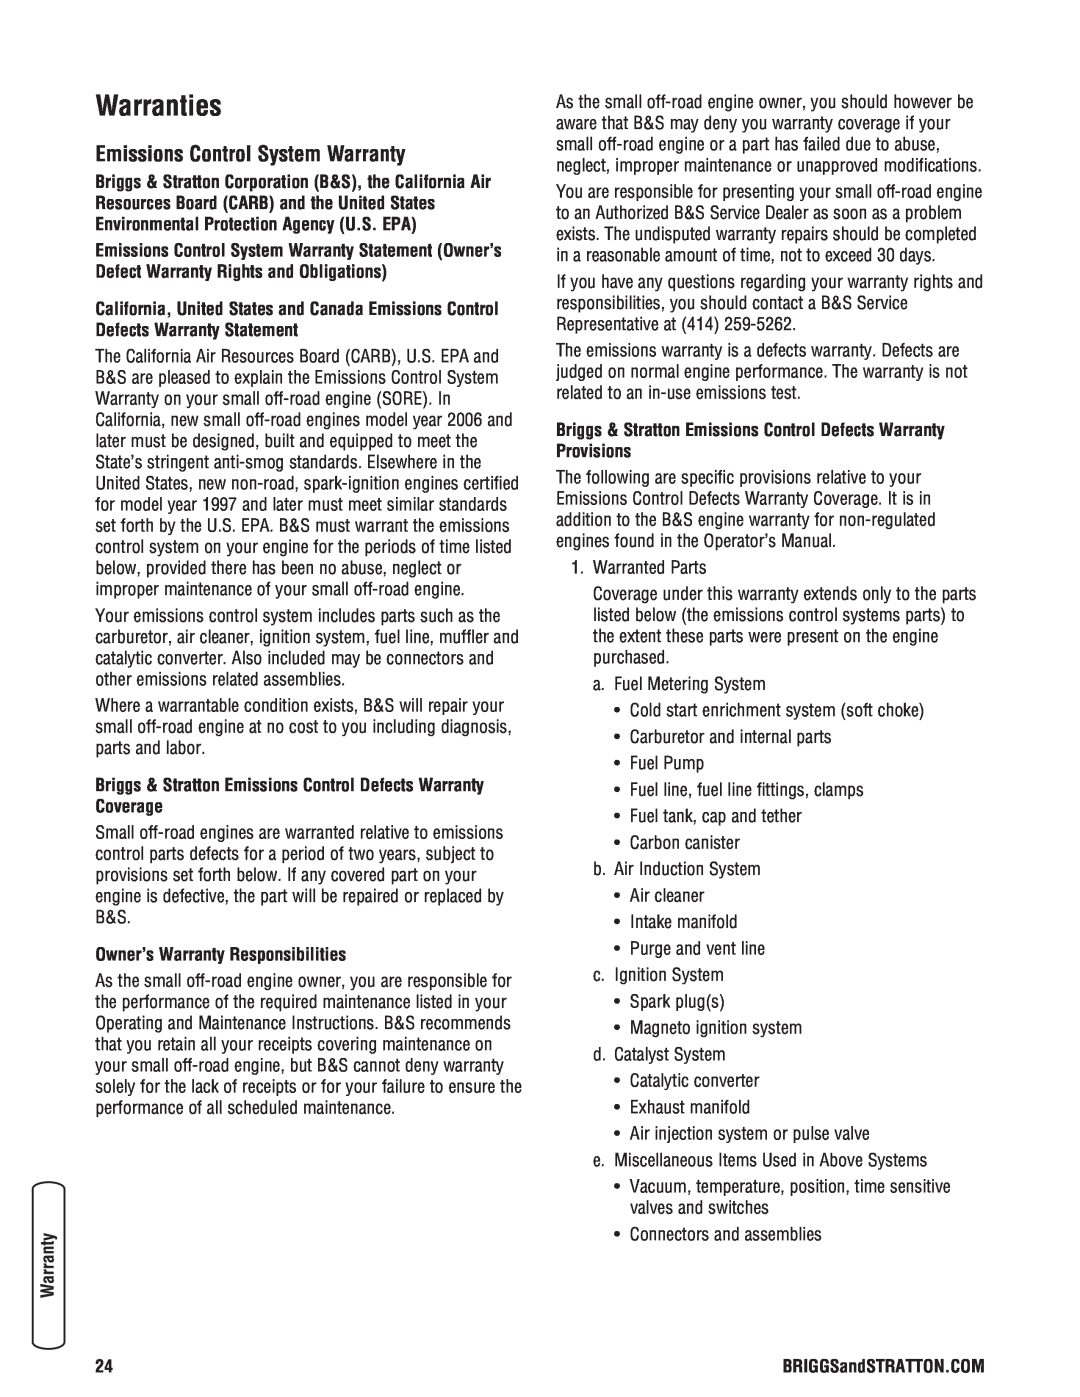 Briggs & Stratton 13500 manual Warranties, Emissions Control System Warranty, Owner’s Warranty Responsibilities 